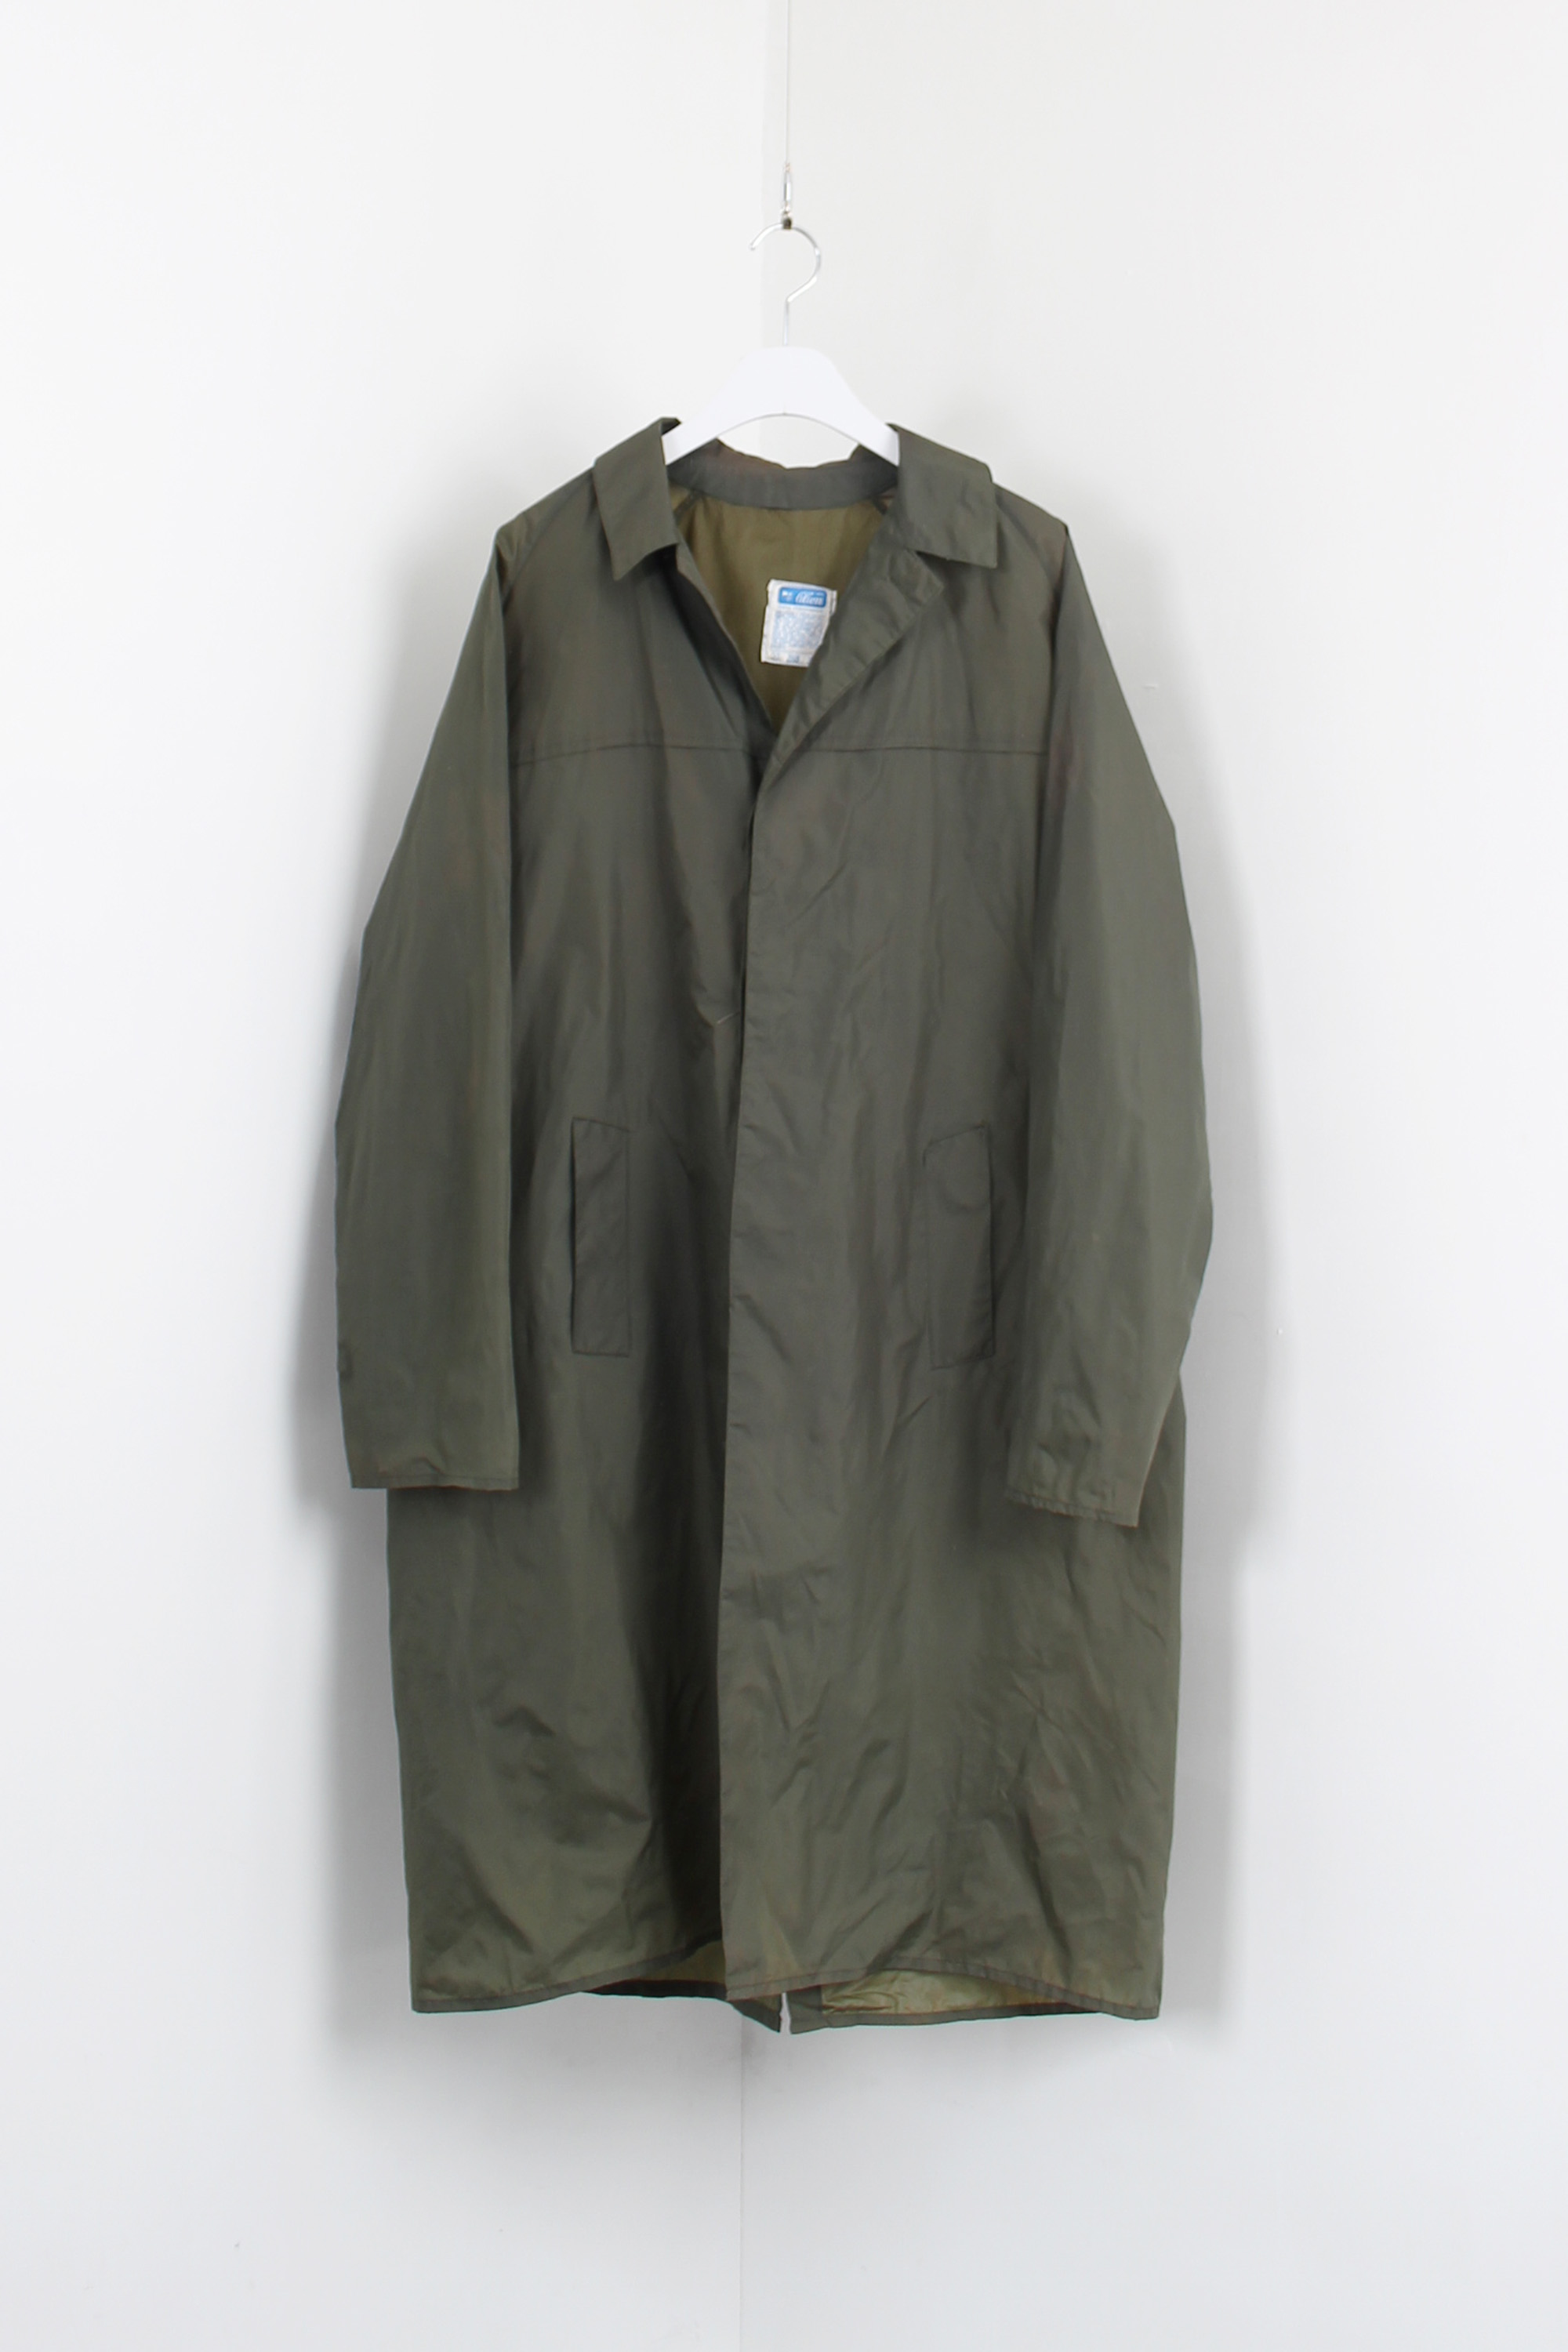 6-70s Italian rain coat